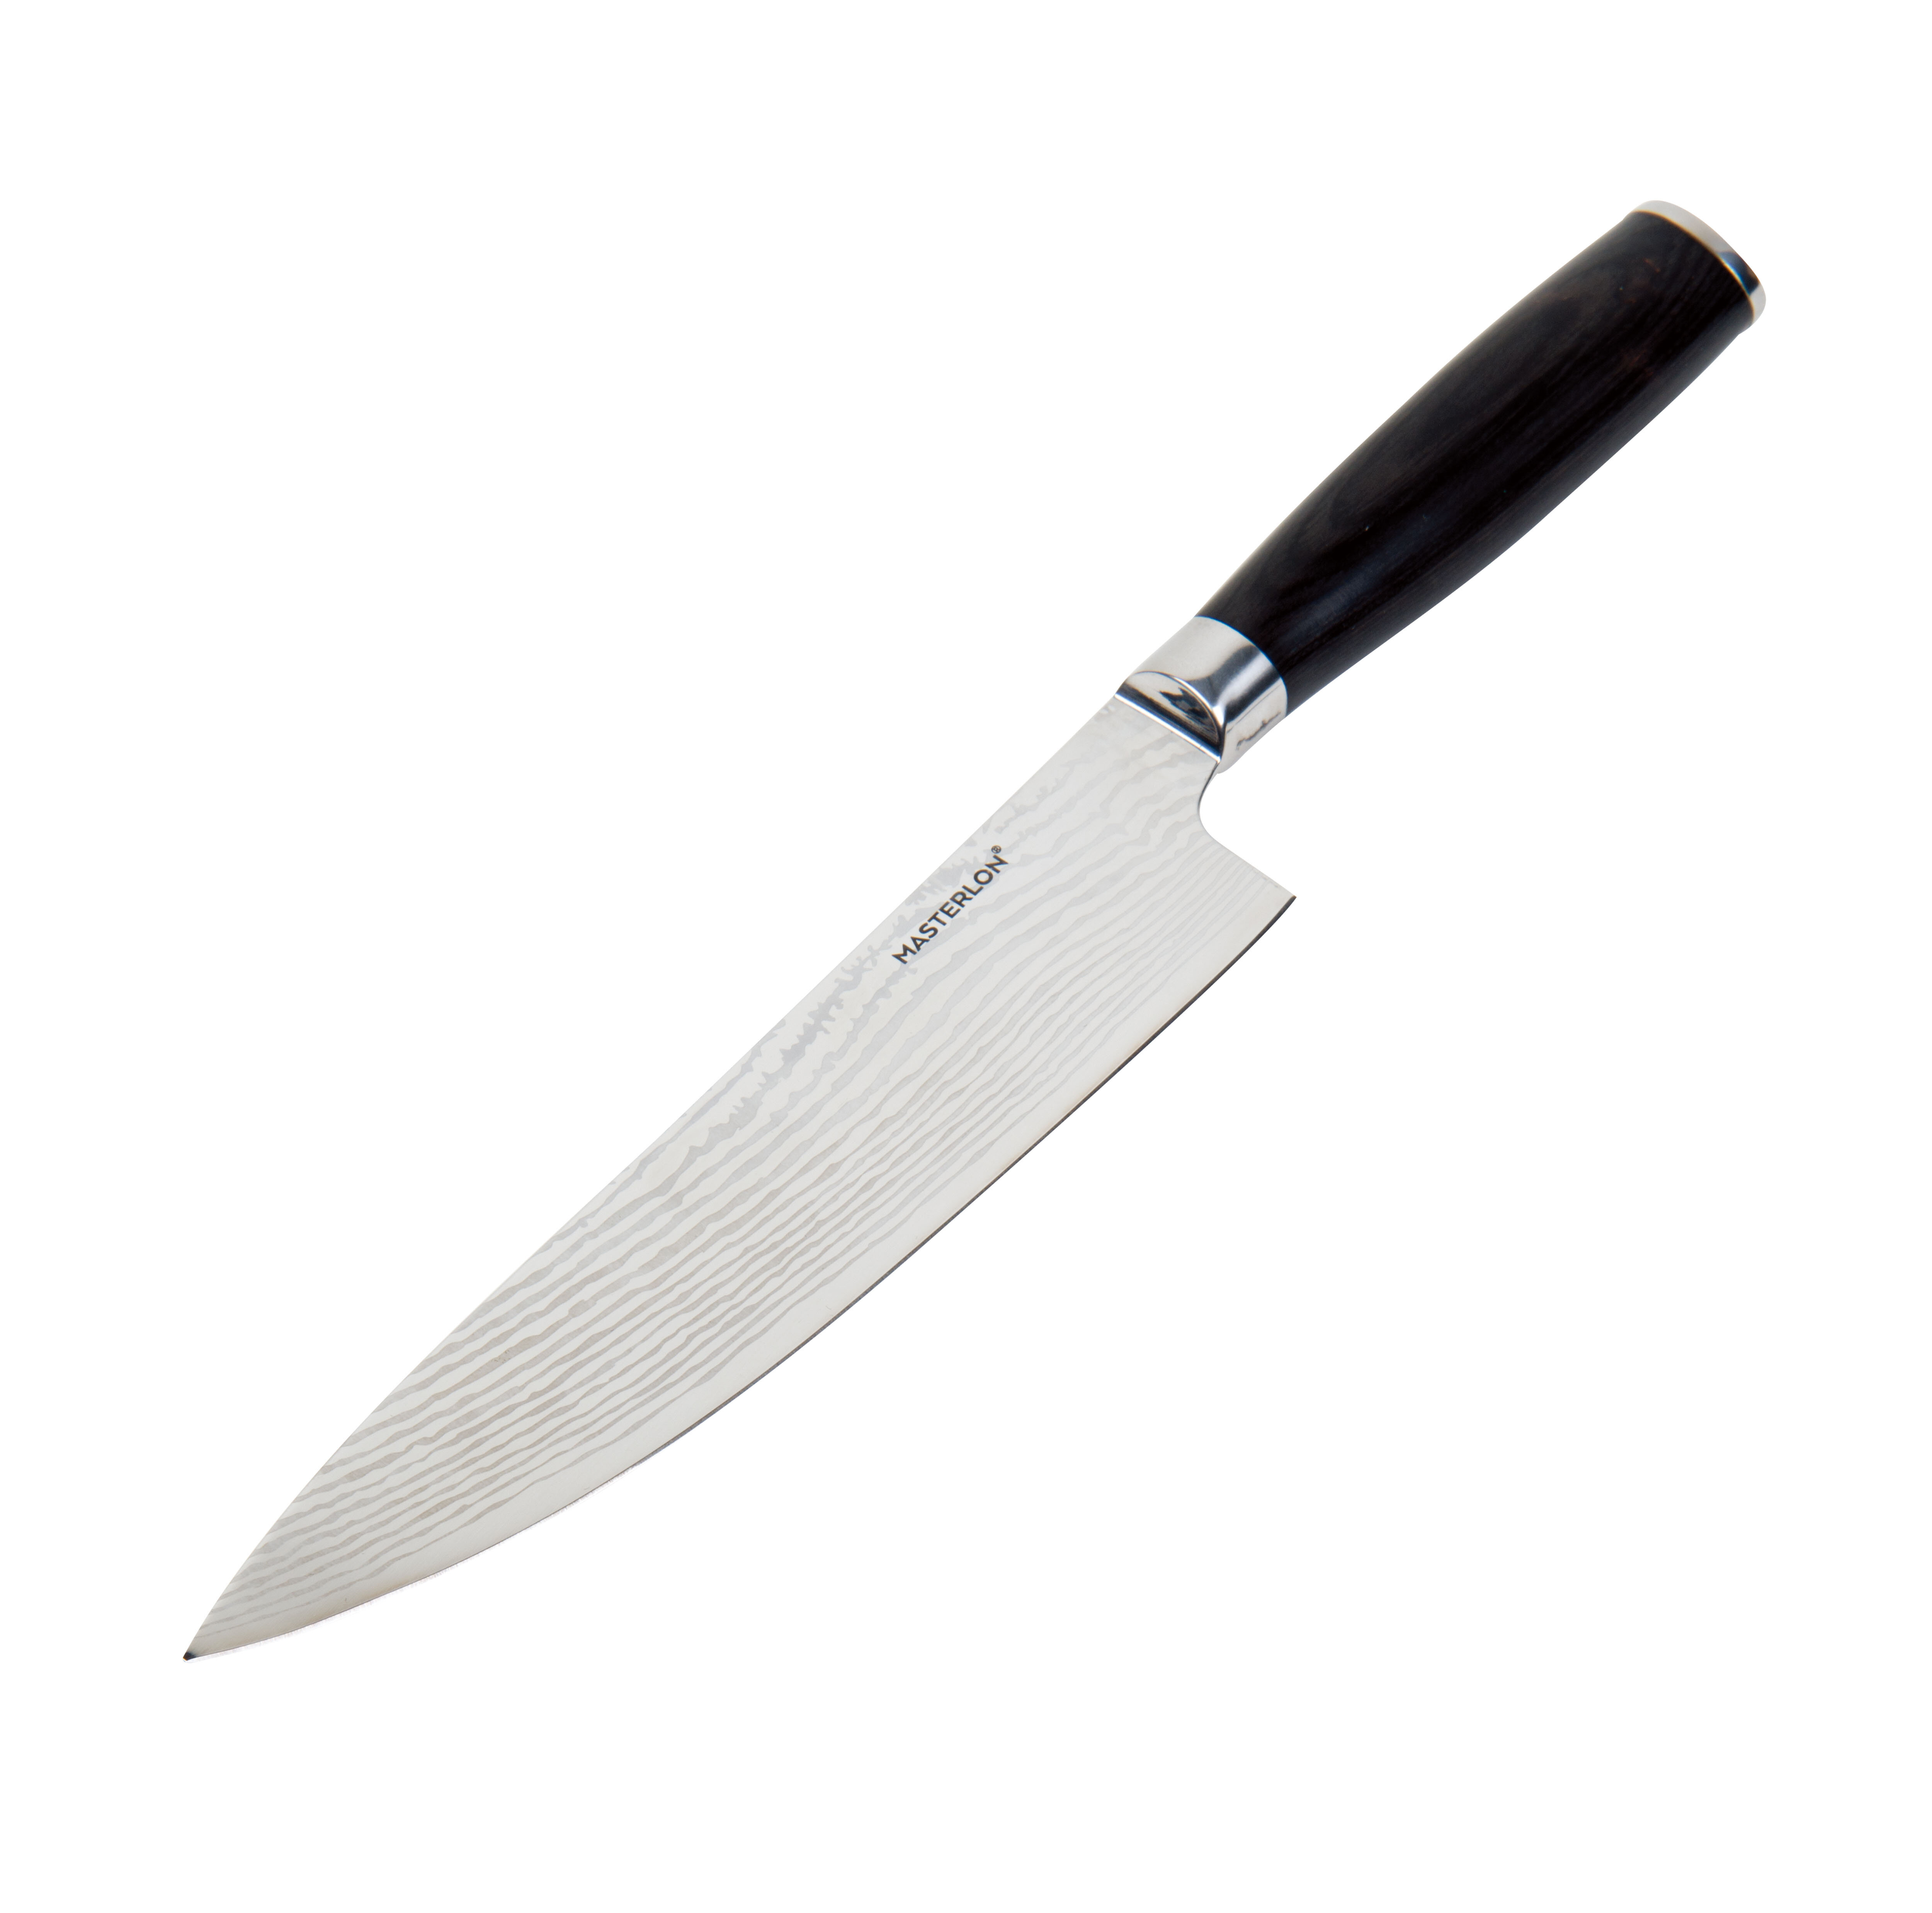 Masterlon 3-Pc Knife Set with Bamboo Cutting Board 8